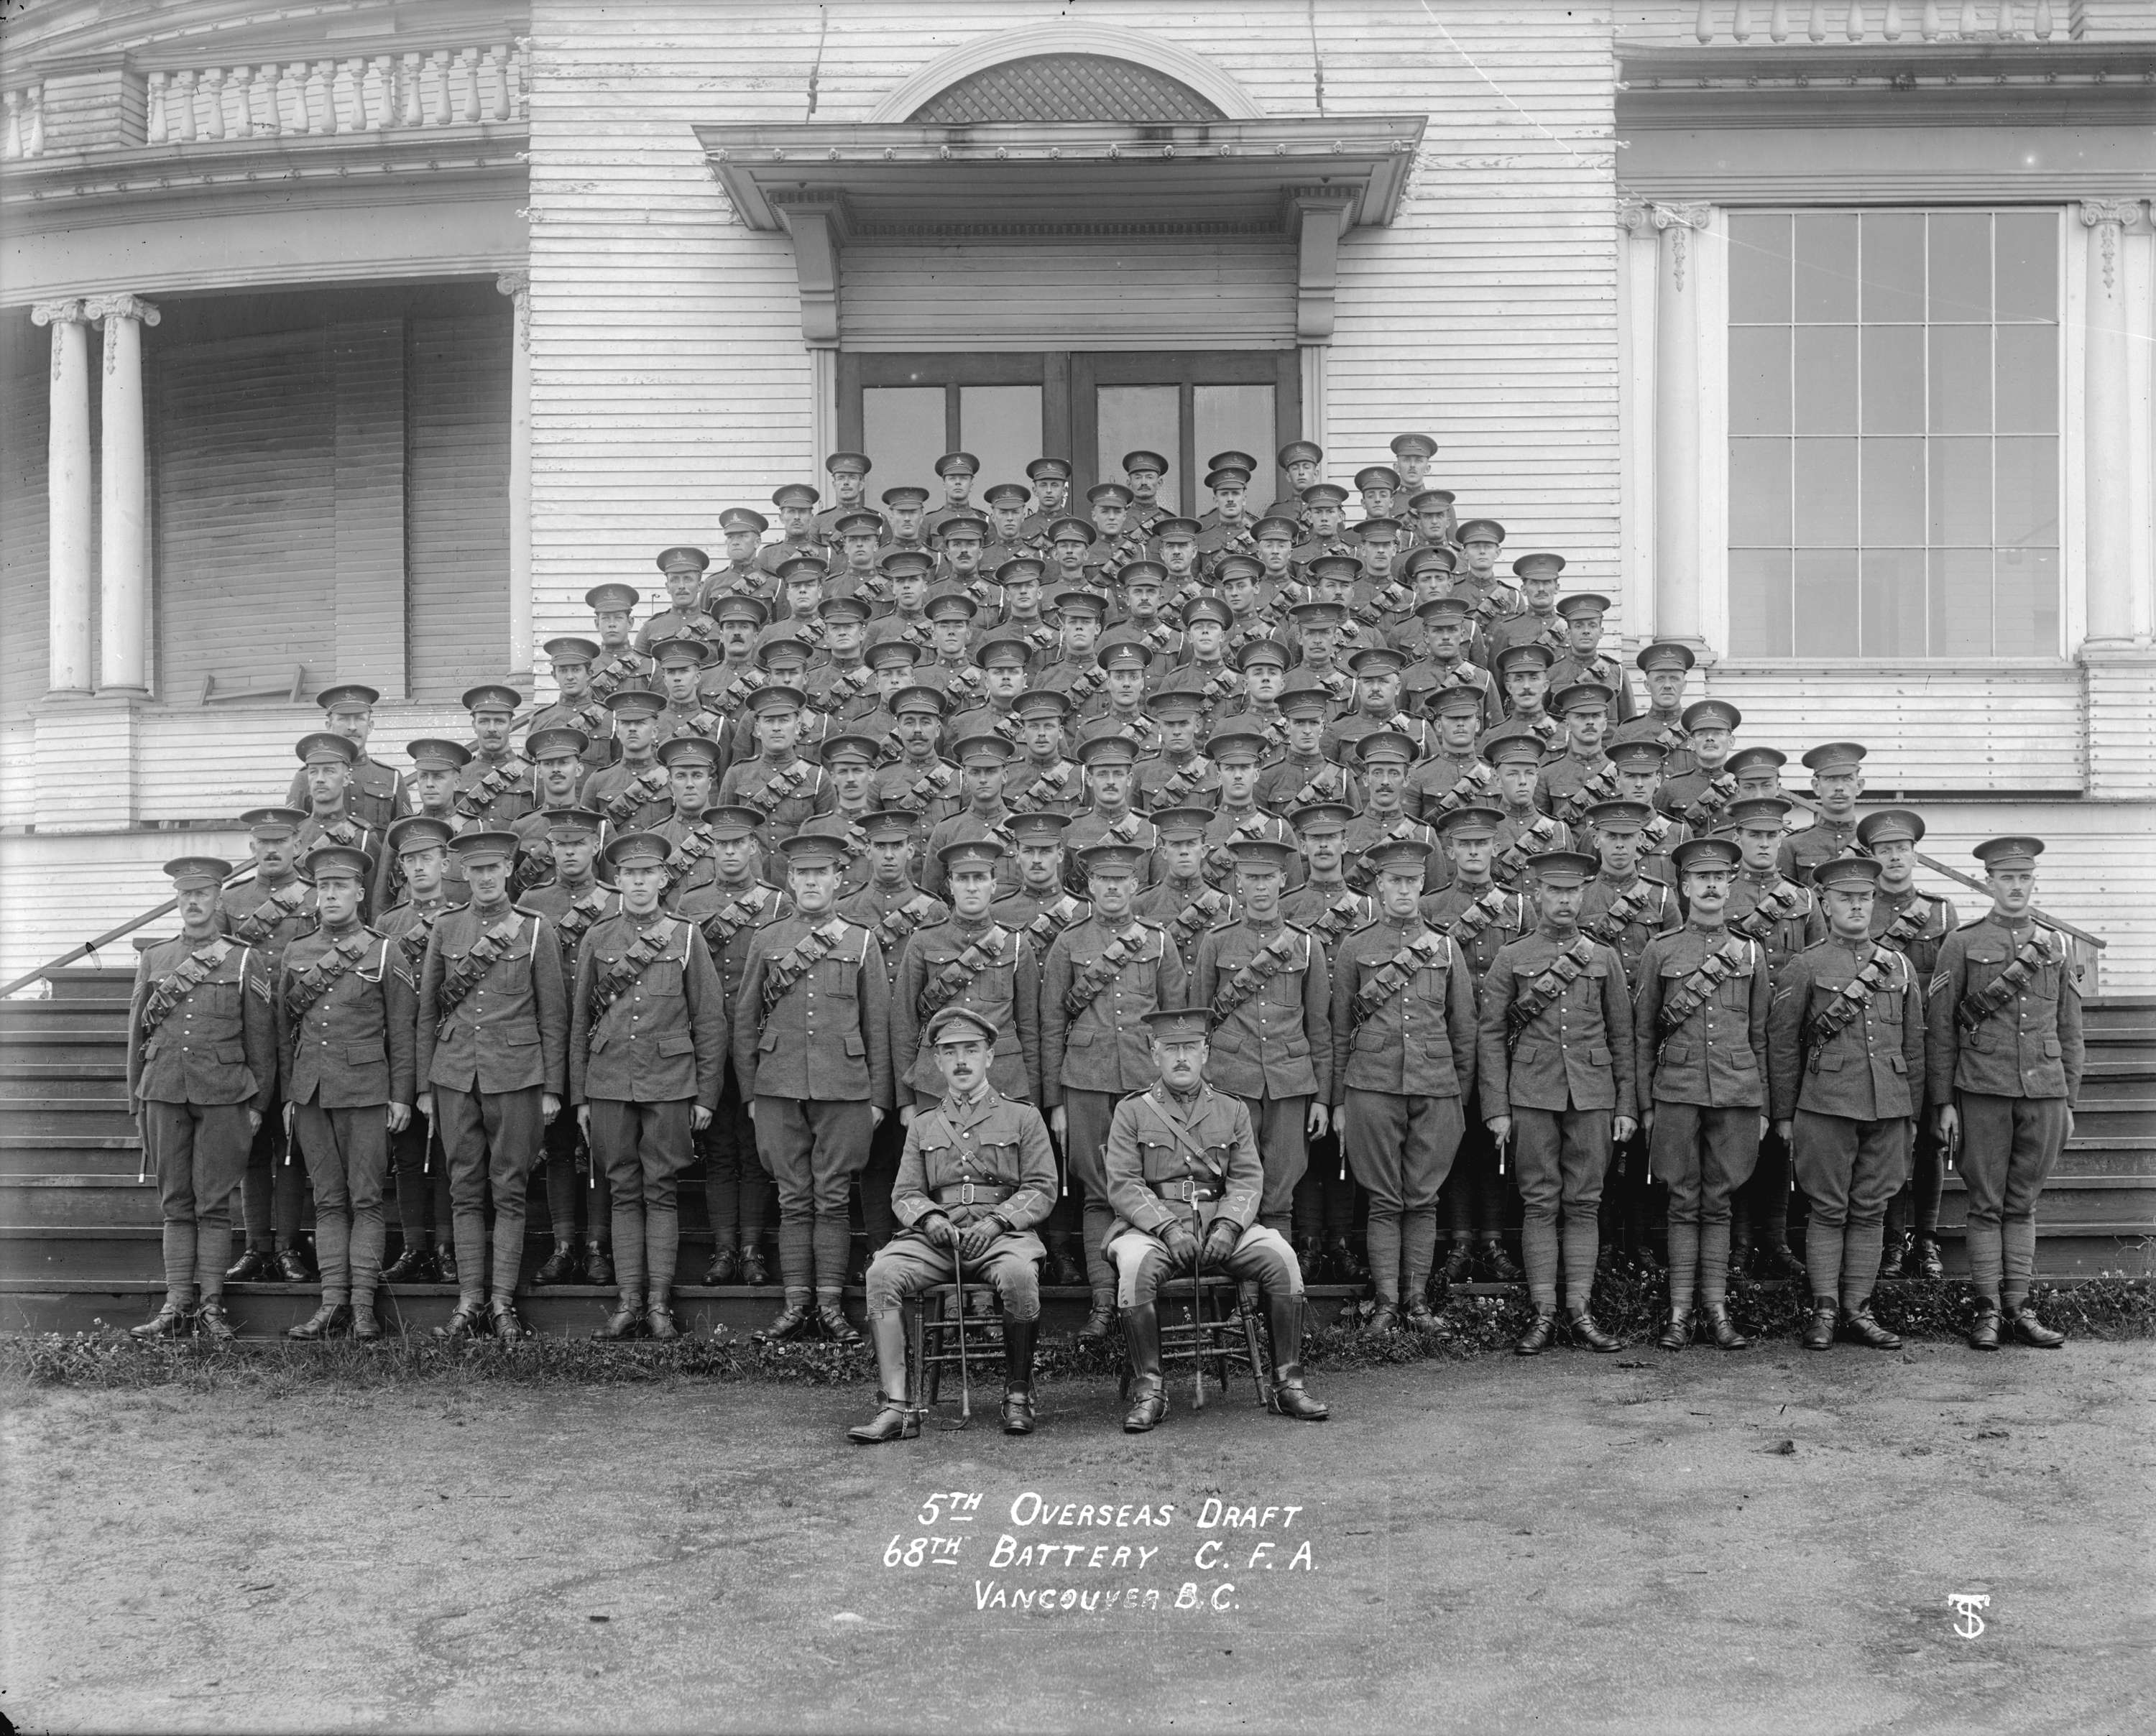 5th Overseas Draft 68th Battery C.F.A. Vancouver, B.C., Oct. 1916.jpg